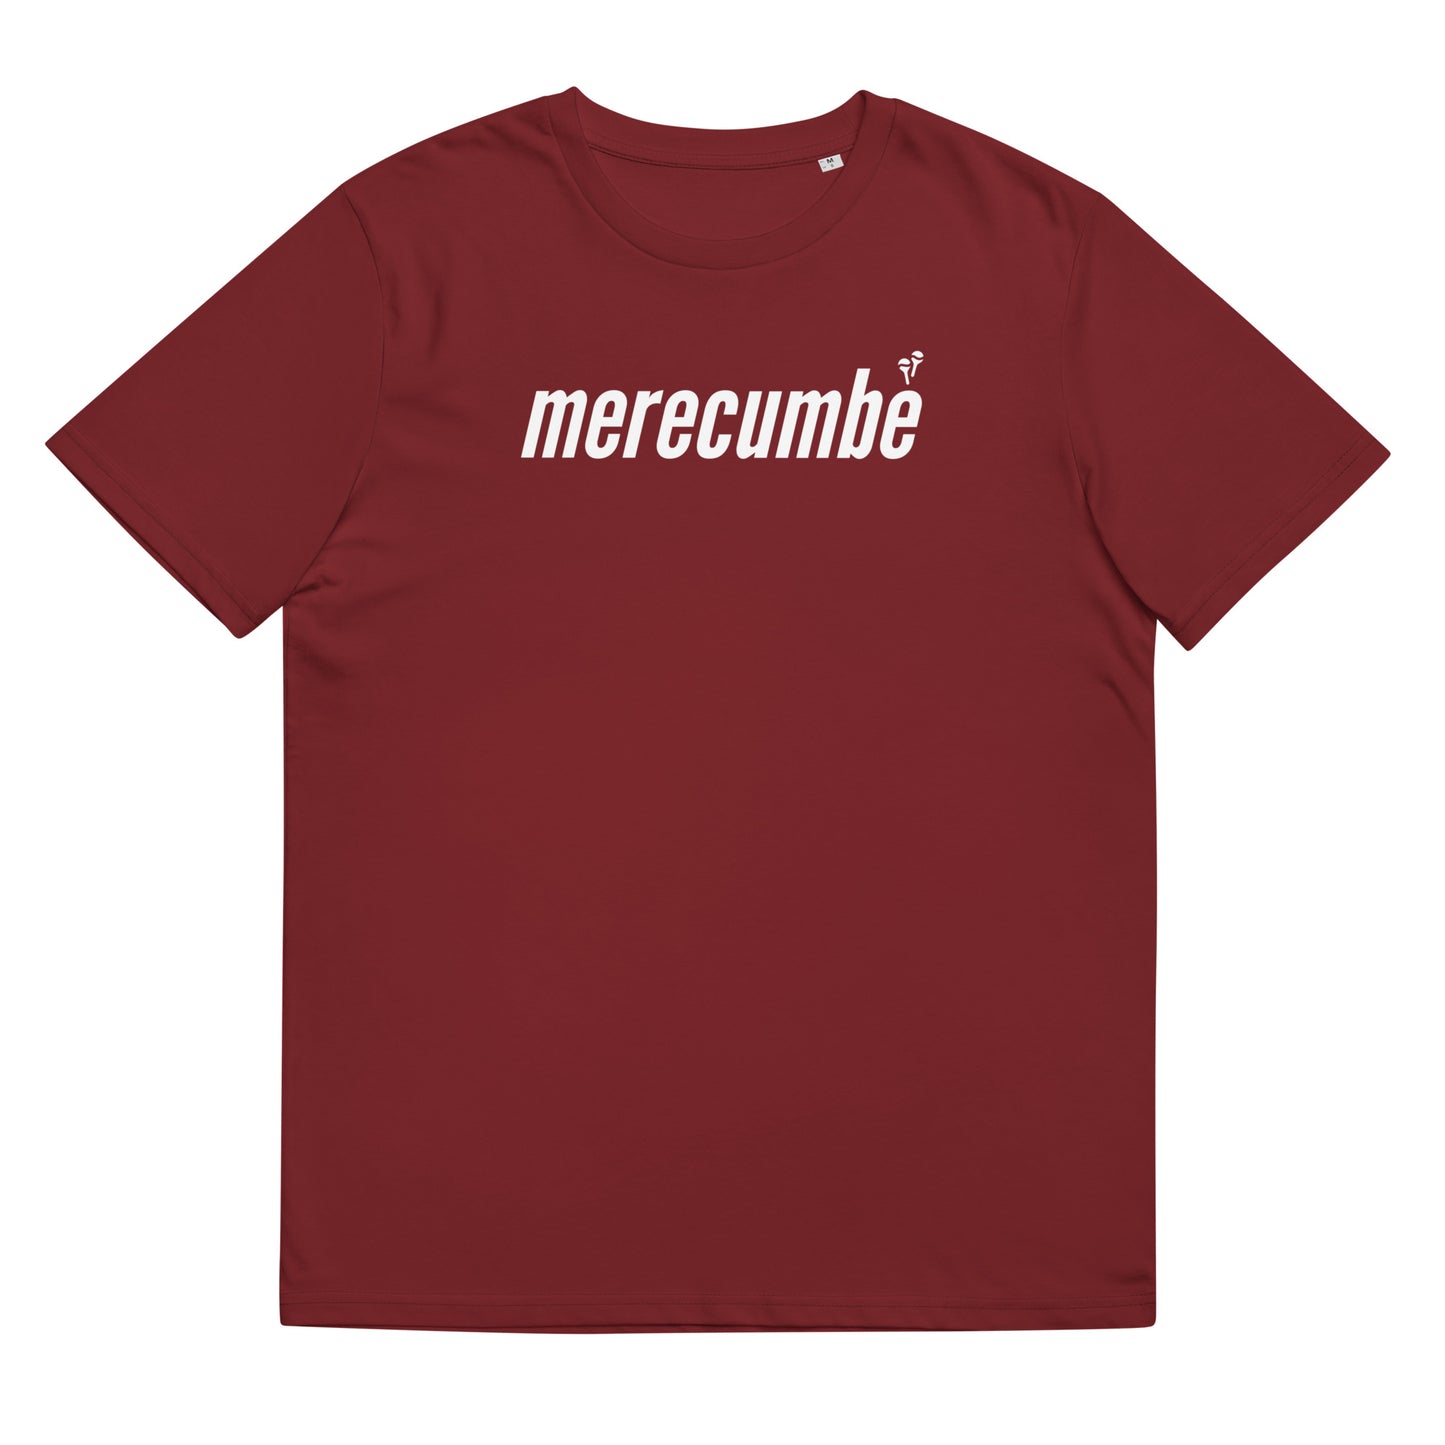 Merecumbé - Unisex organic cotton t-shirt